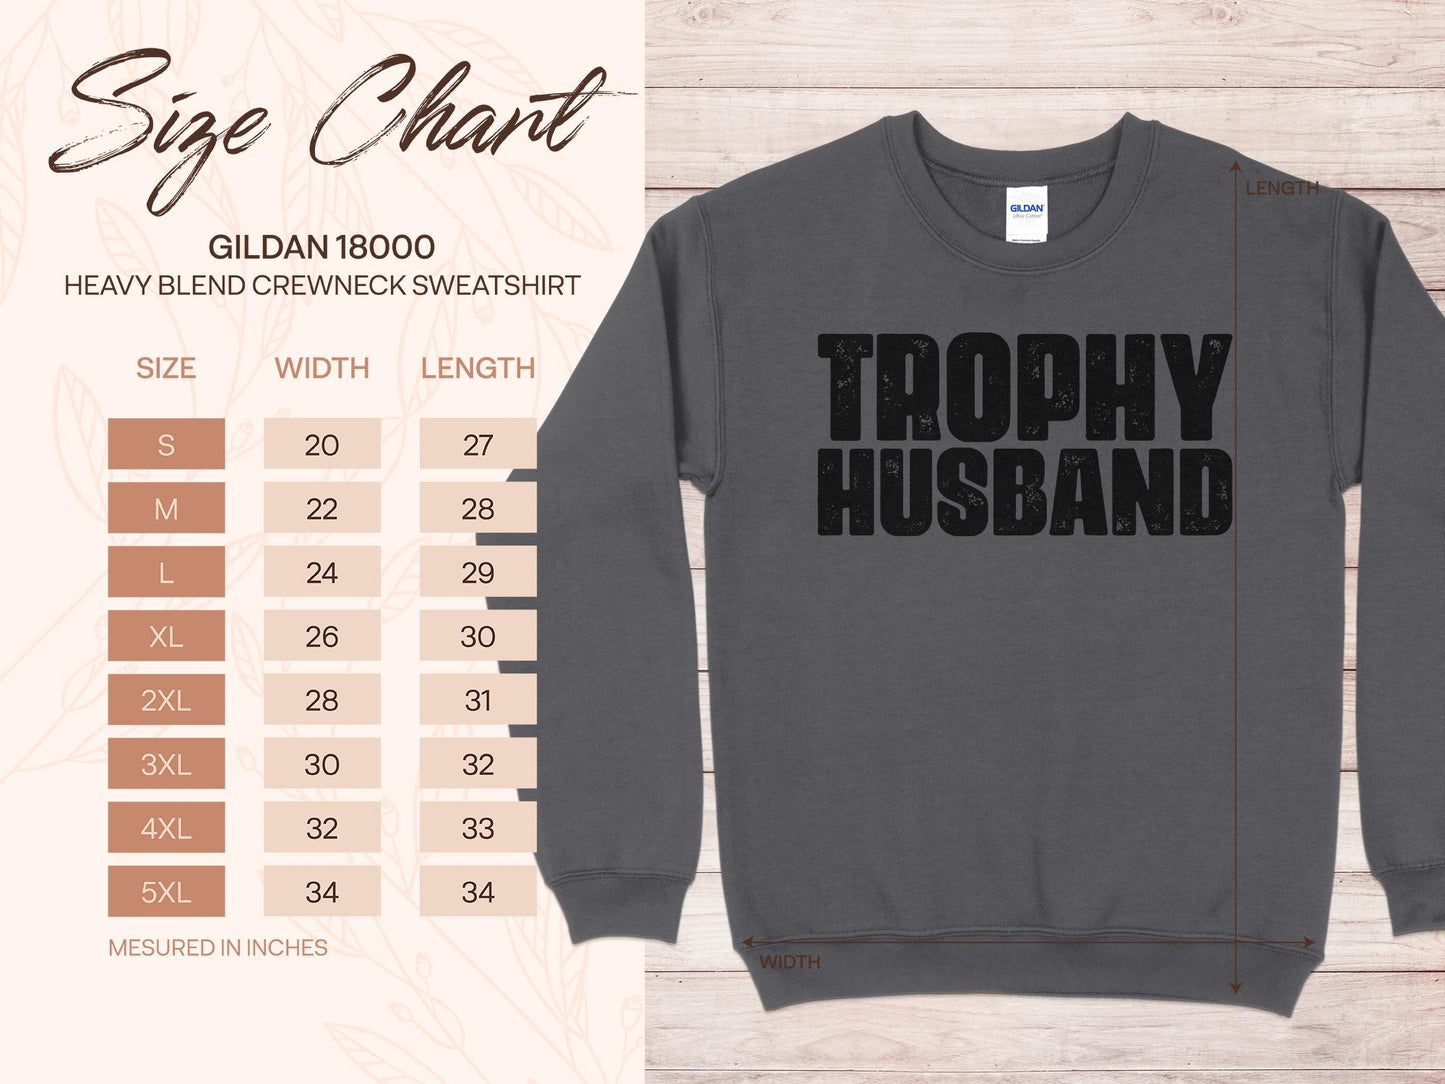 Trophy Husband Sweatshirt, sizing chart